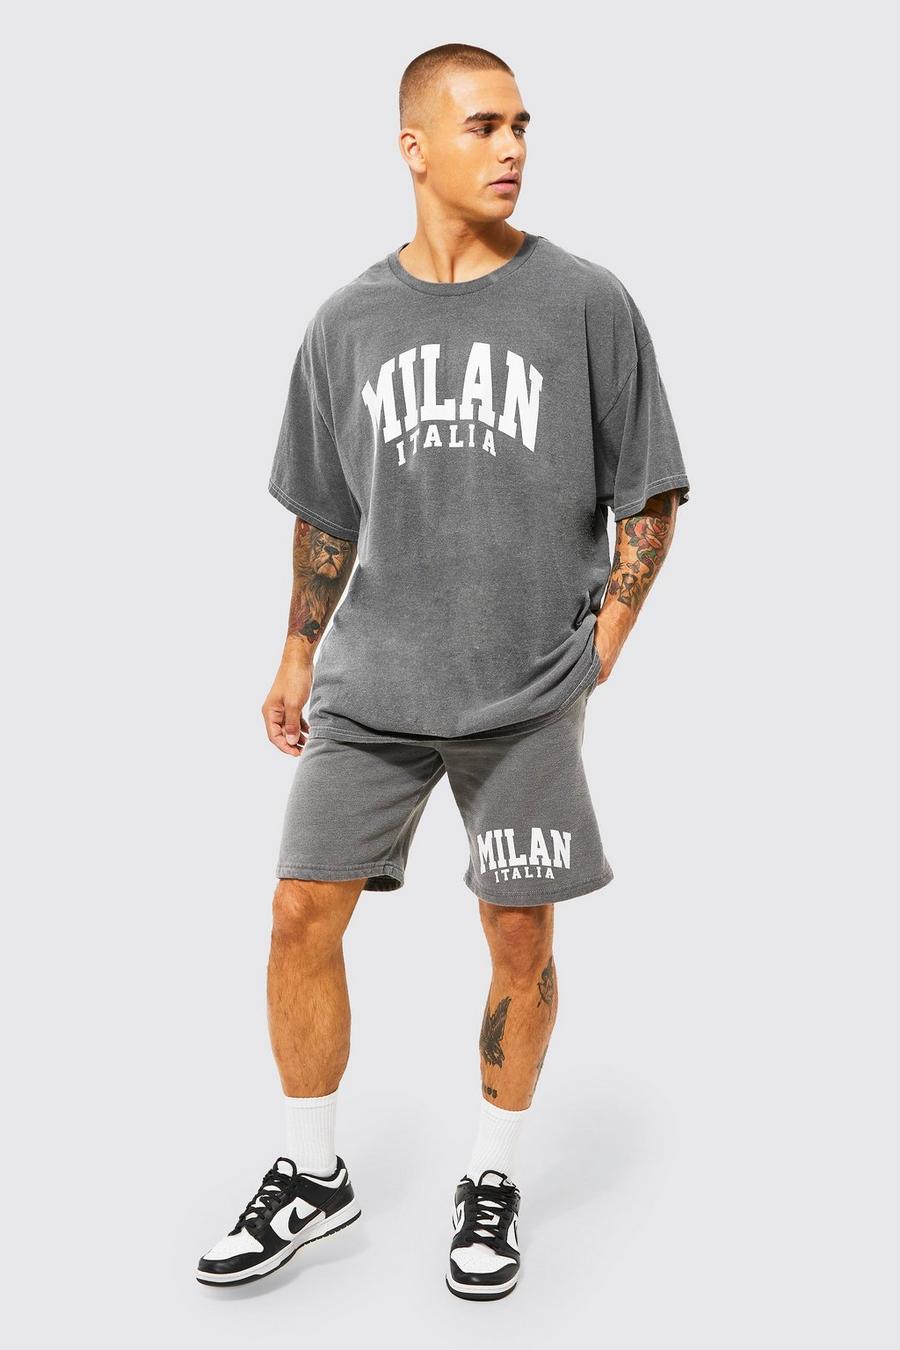 Charcoal grey Oversized Milan T-shirt And Short Set